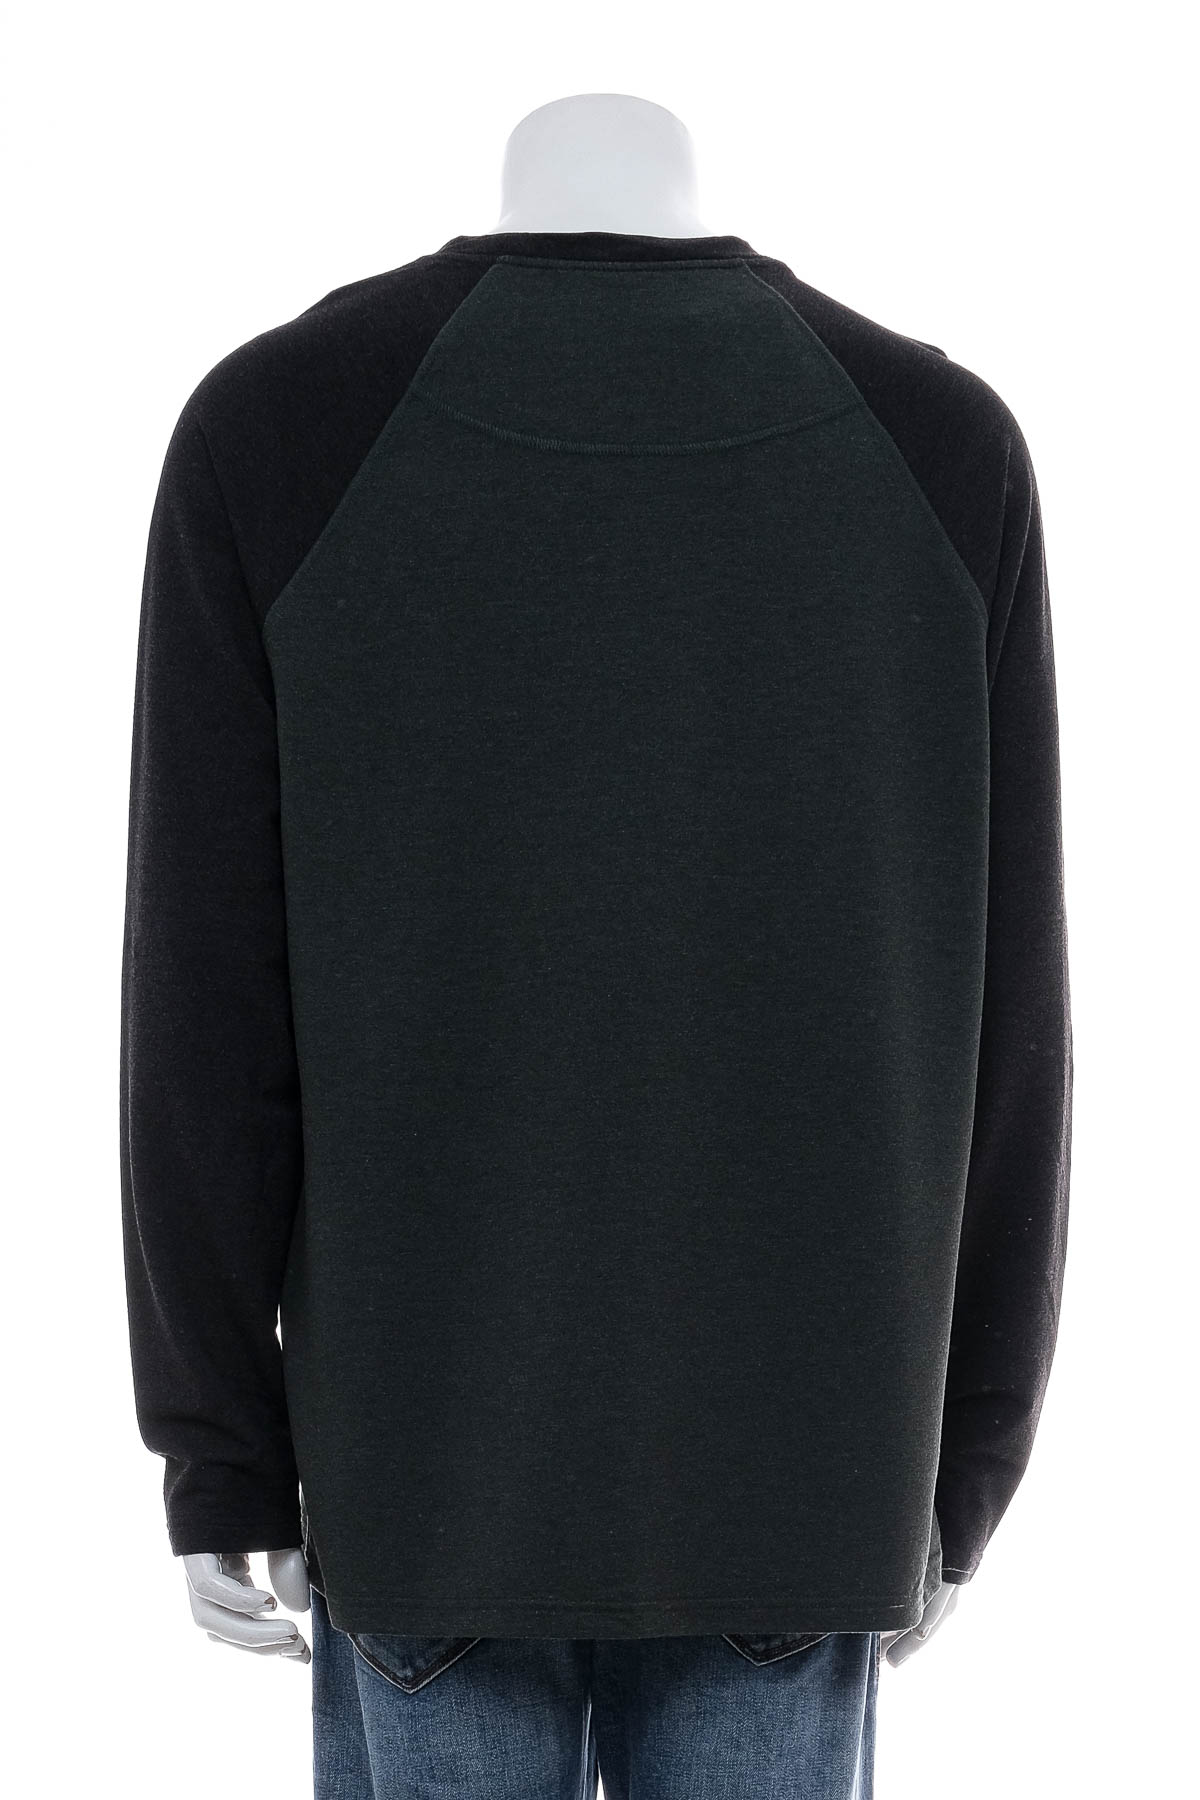 Men's sweater - ORVIS - 1